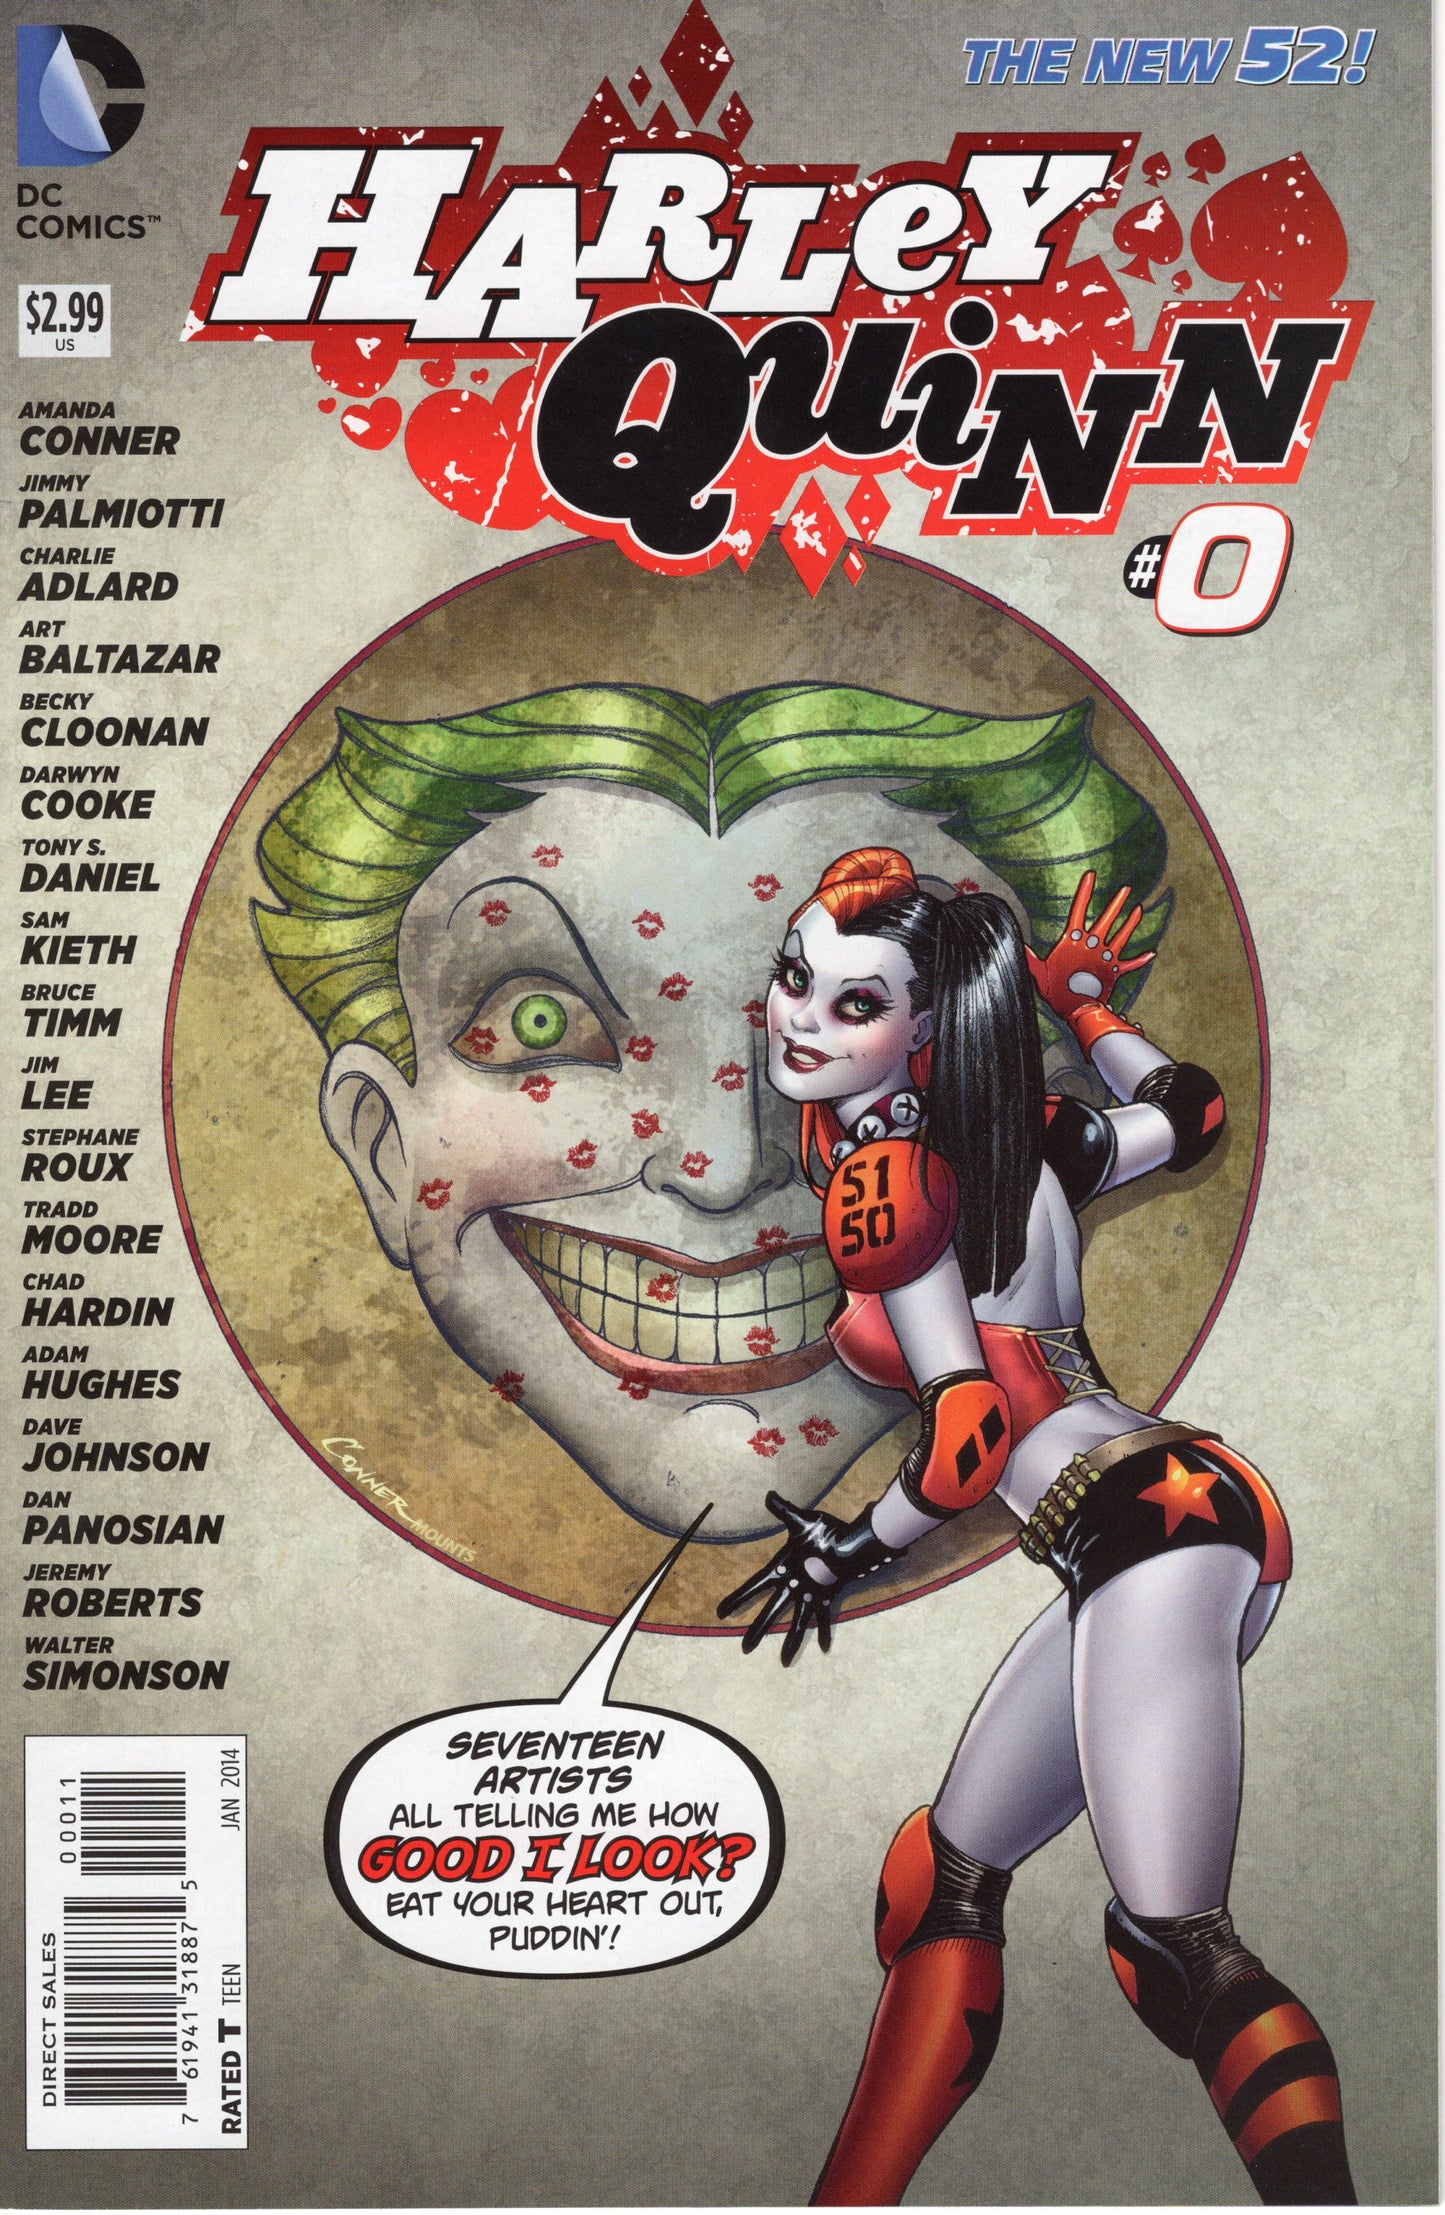 Harley Quinn - Issue #0 (Jan. 2014 - DC Comics) NM